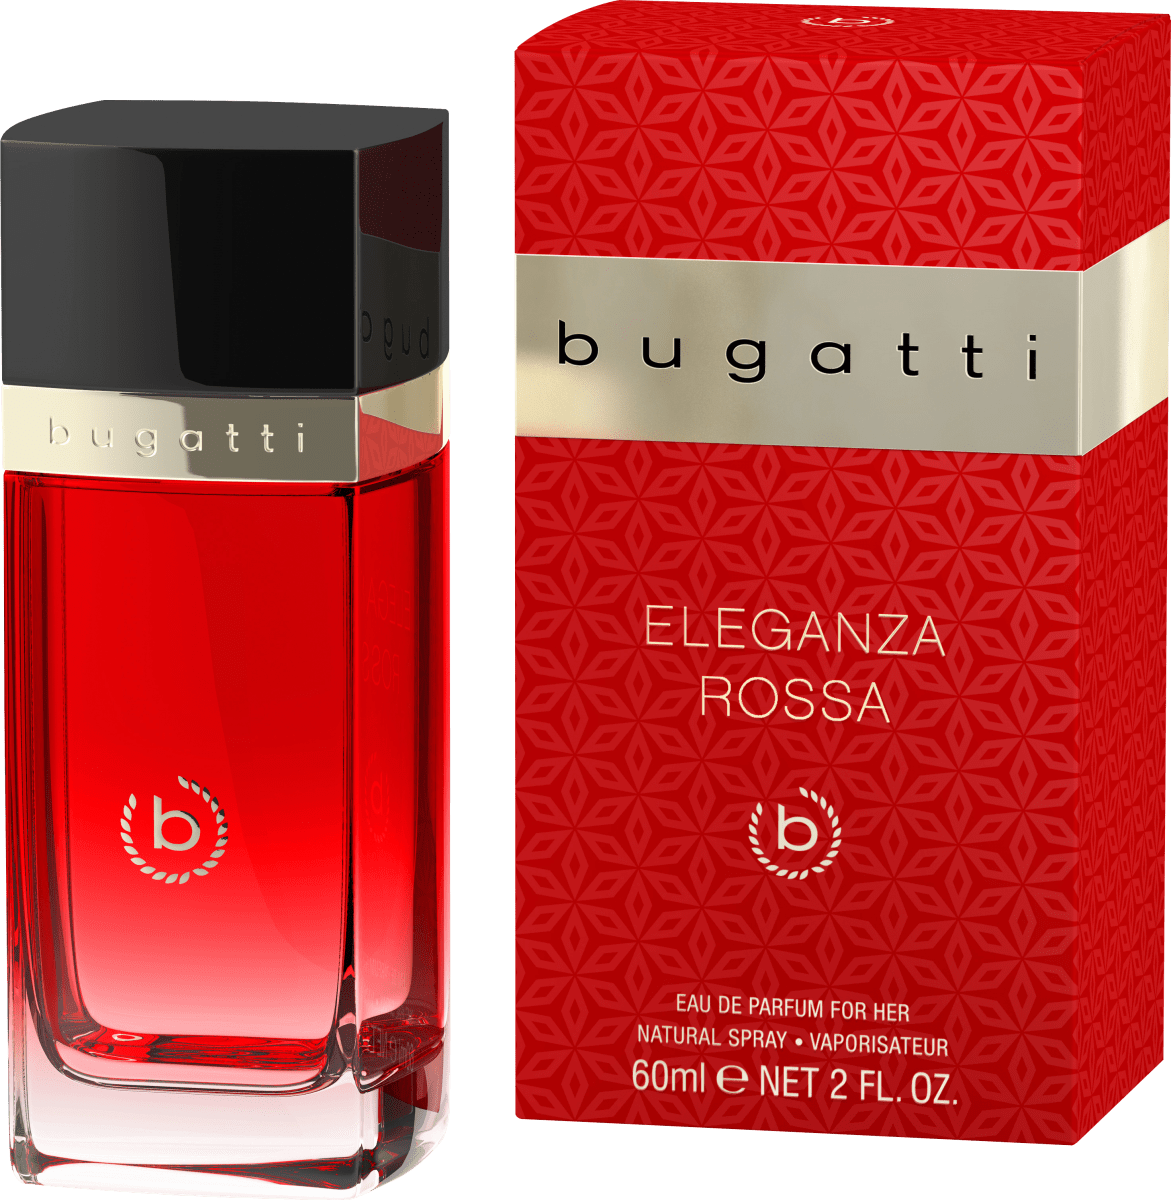 Eau Eleganza bugatti Rossa Parfum, 60 de ml